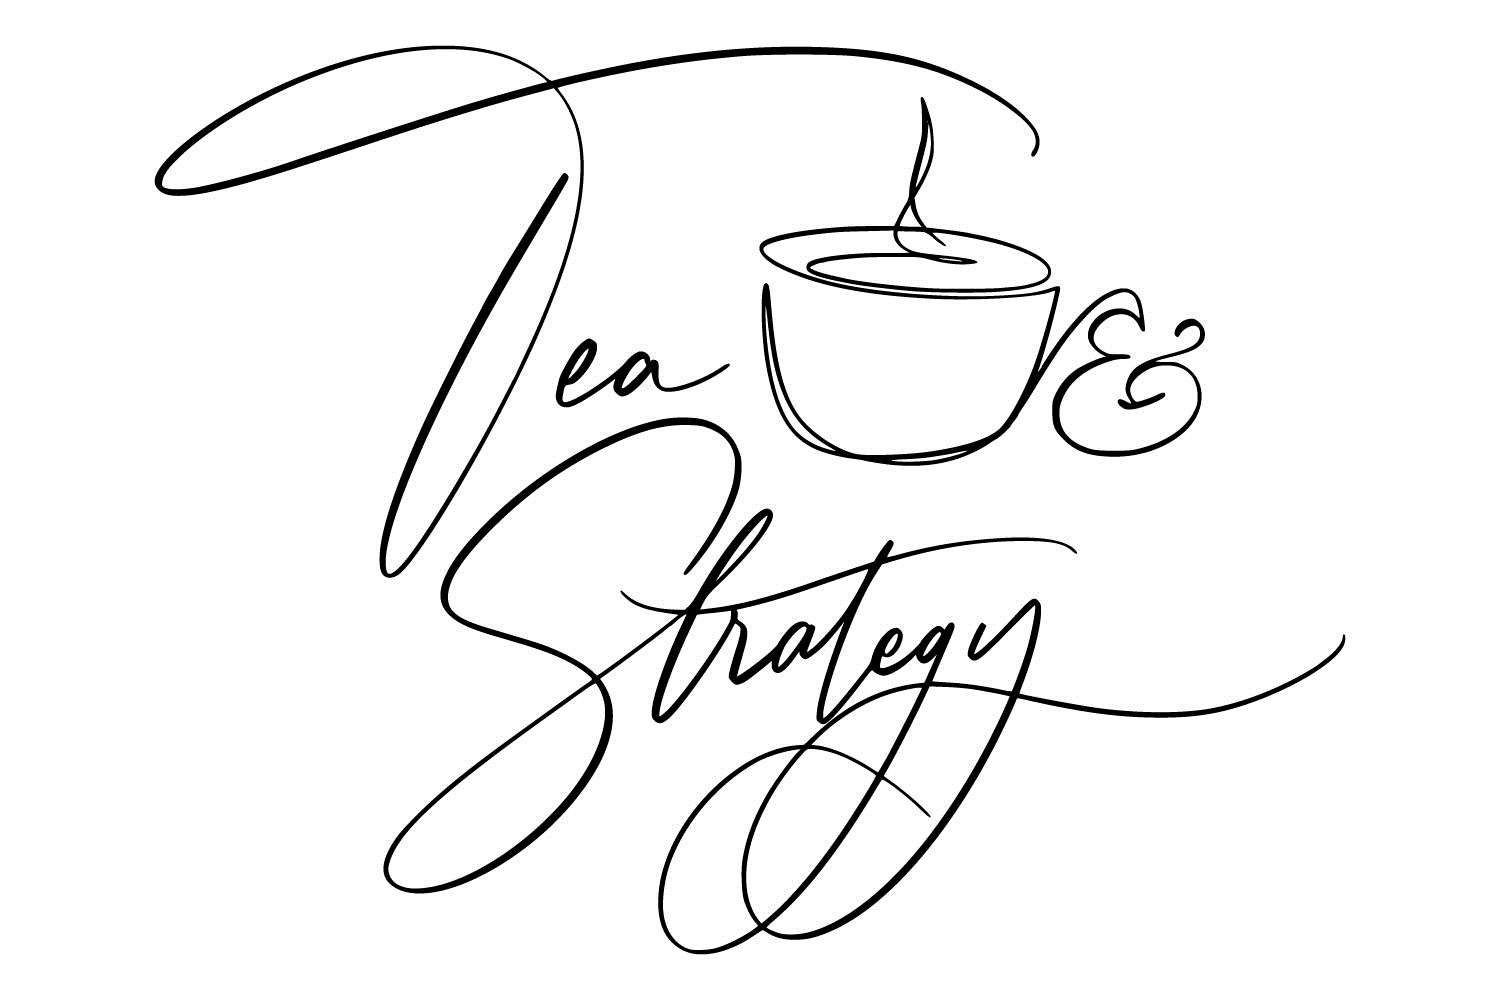 Tea & Strategy